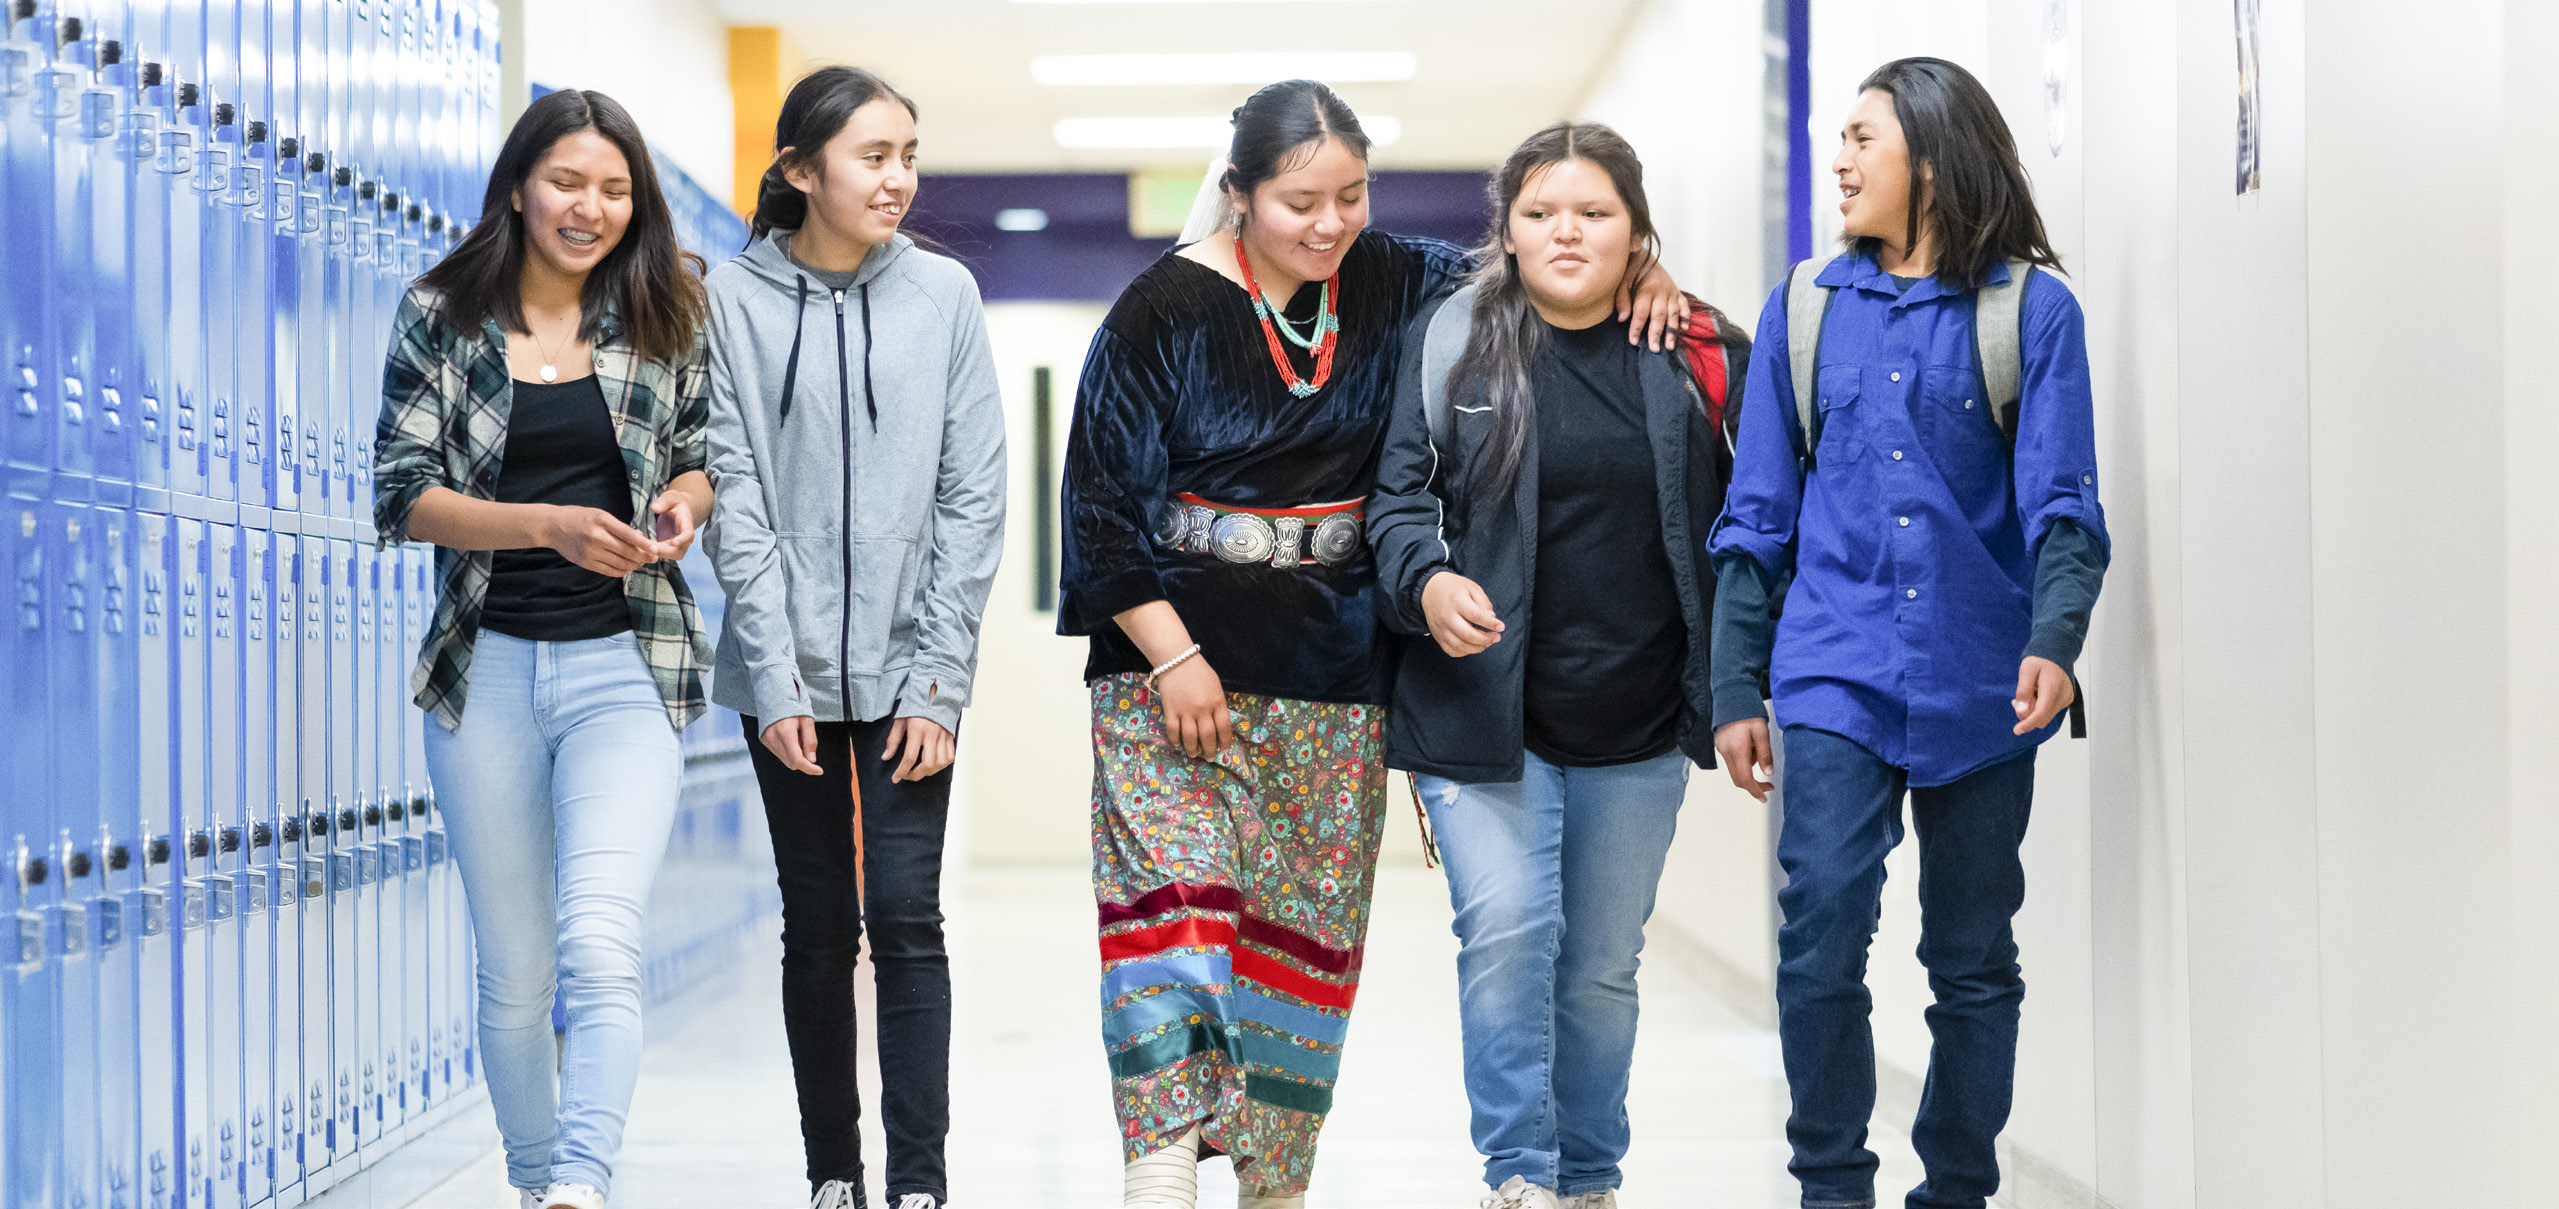 Five teens walk down a school hallway lined with lockers